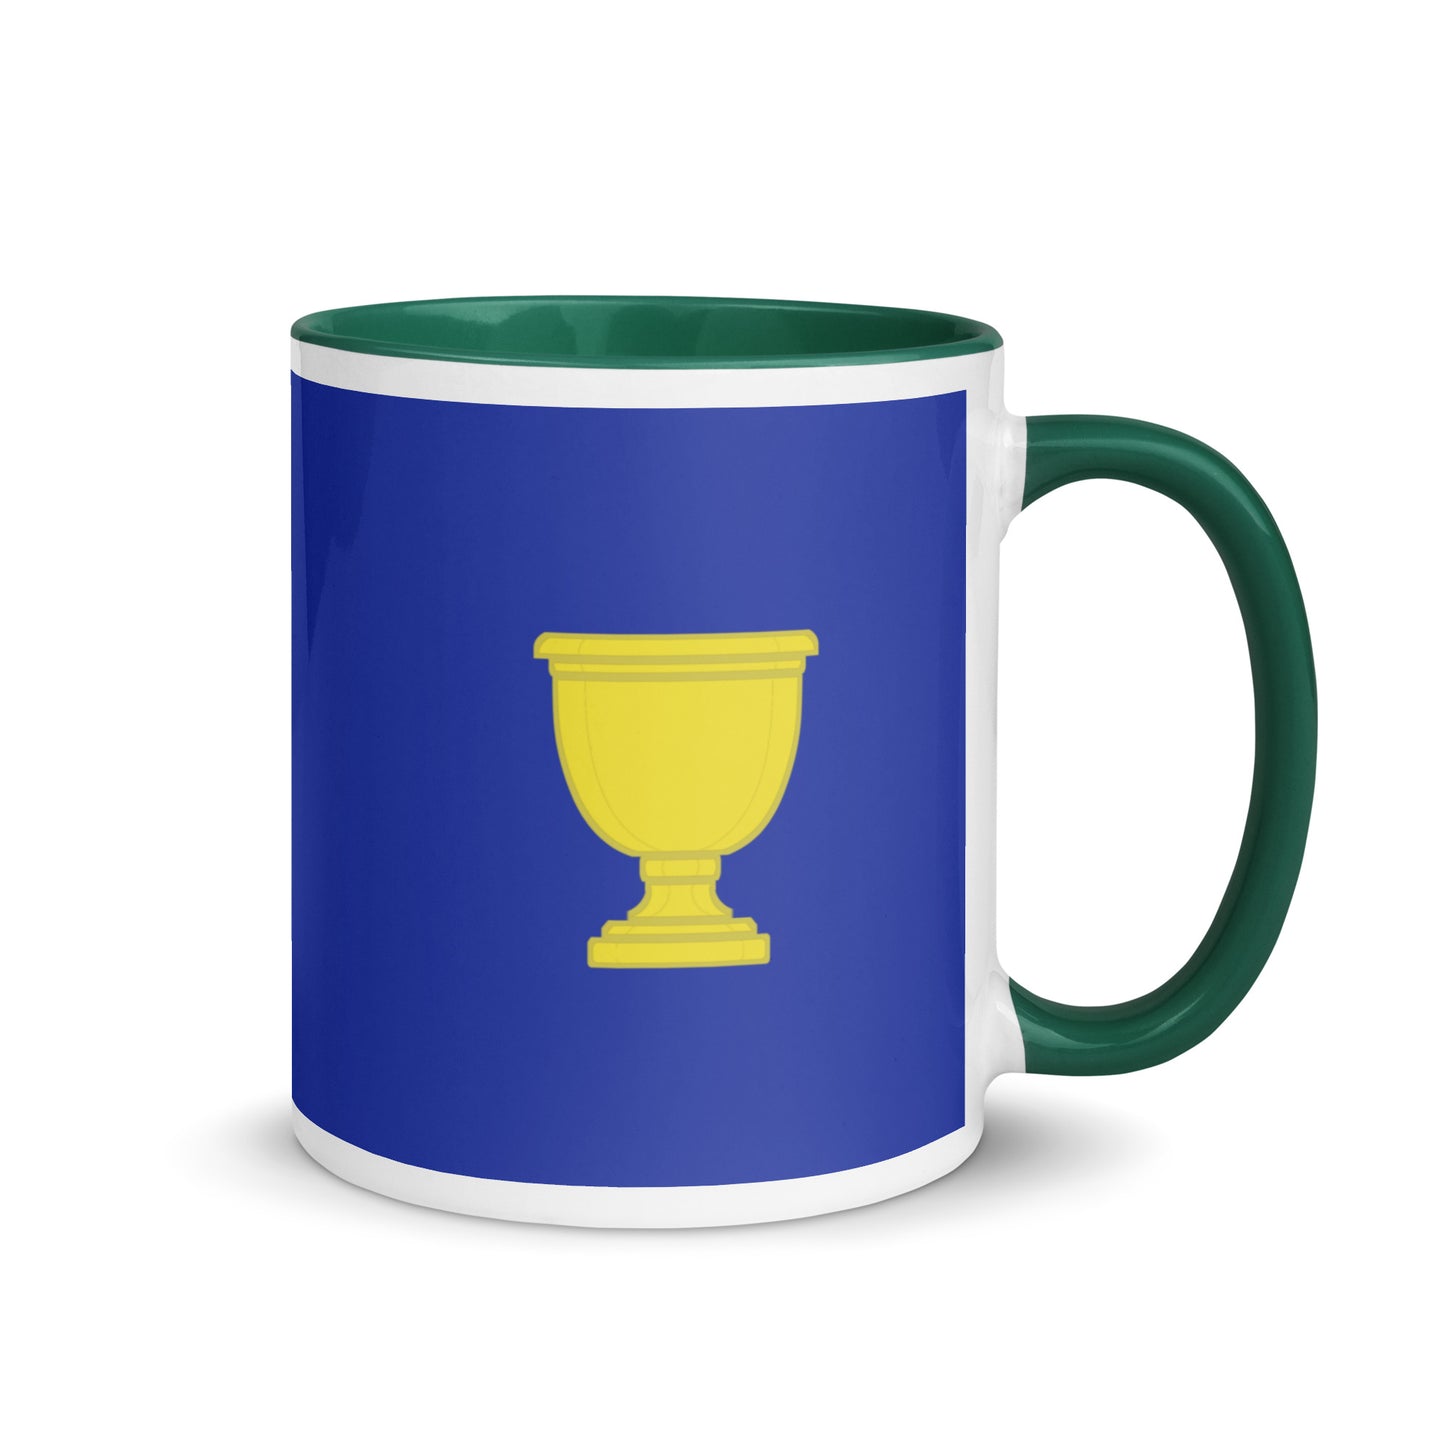 President's Cup Mug / Presidents Cup Mug with Color Inside